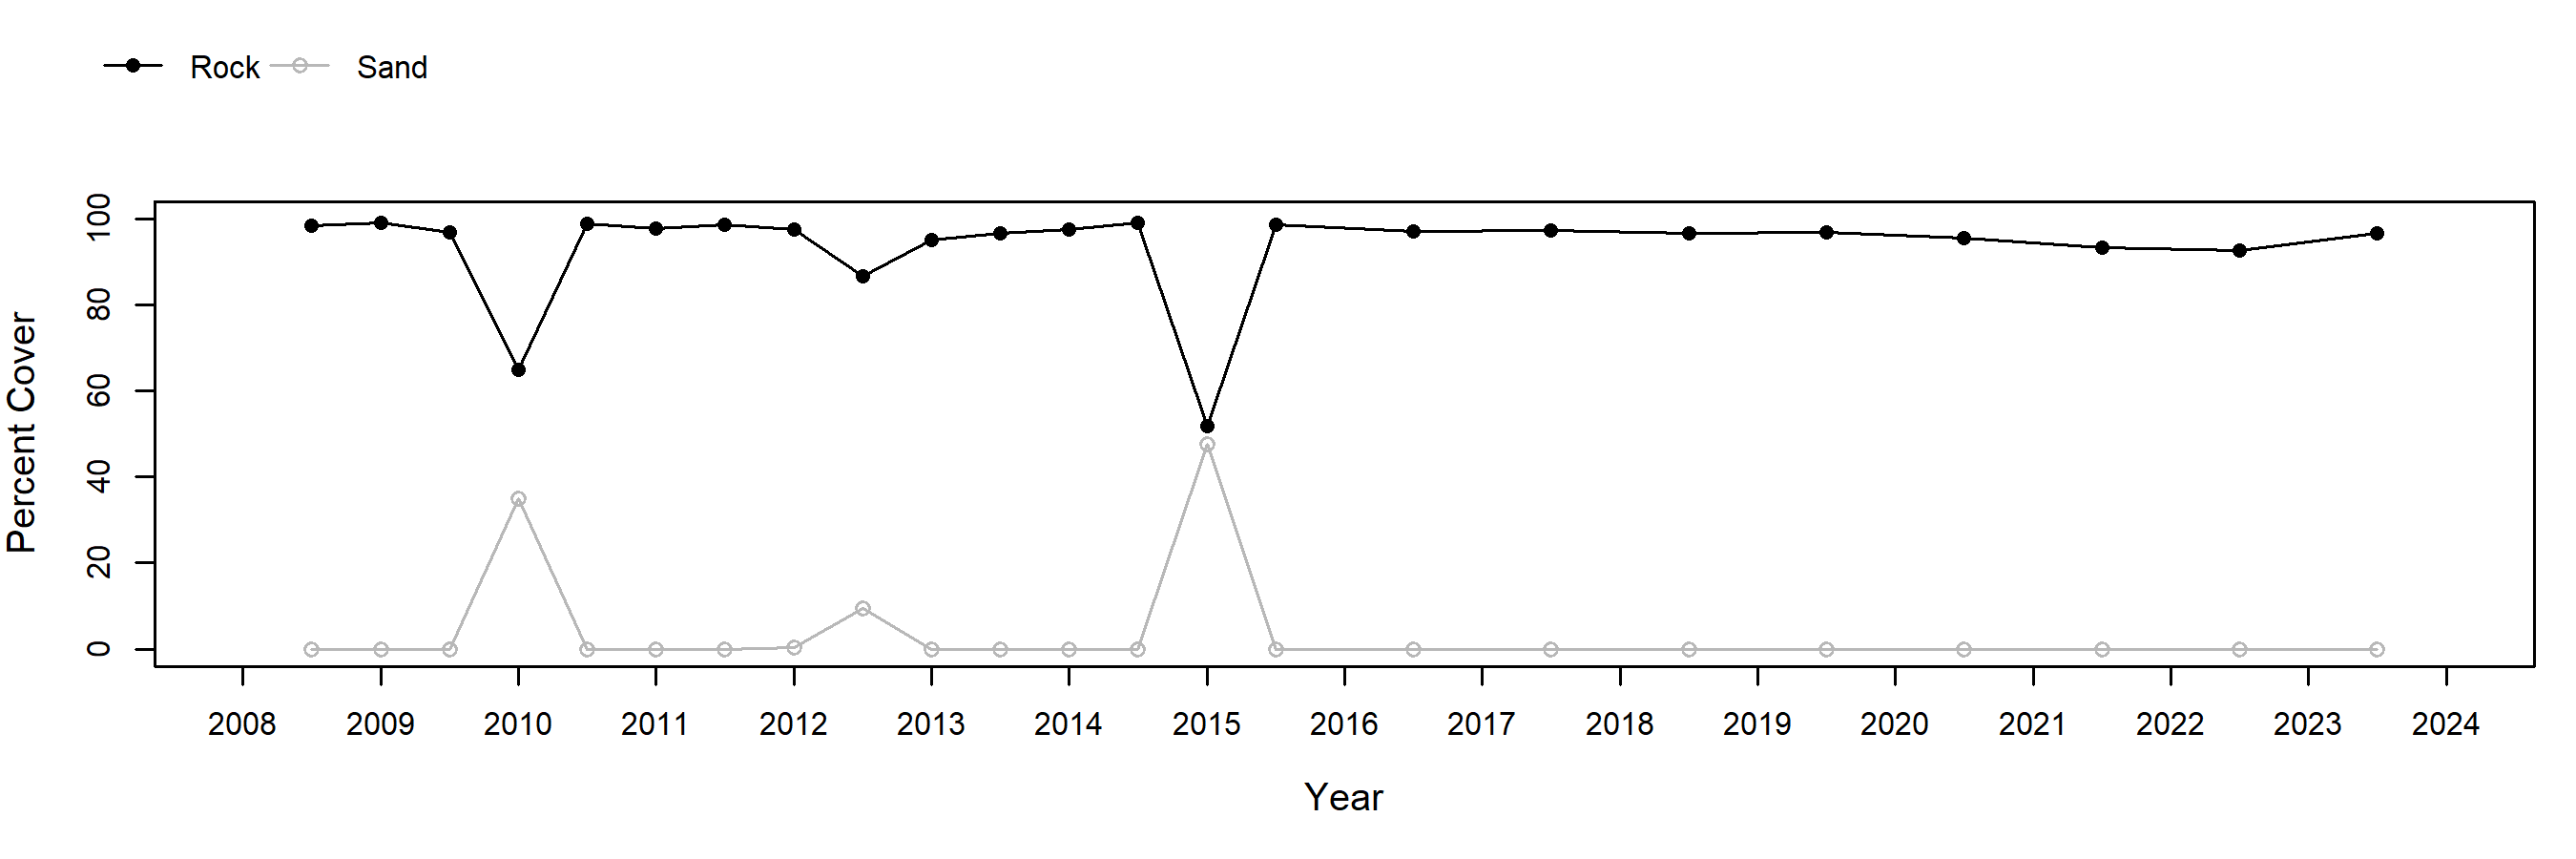 Arroyo Hondo rock trend plot